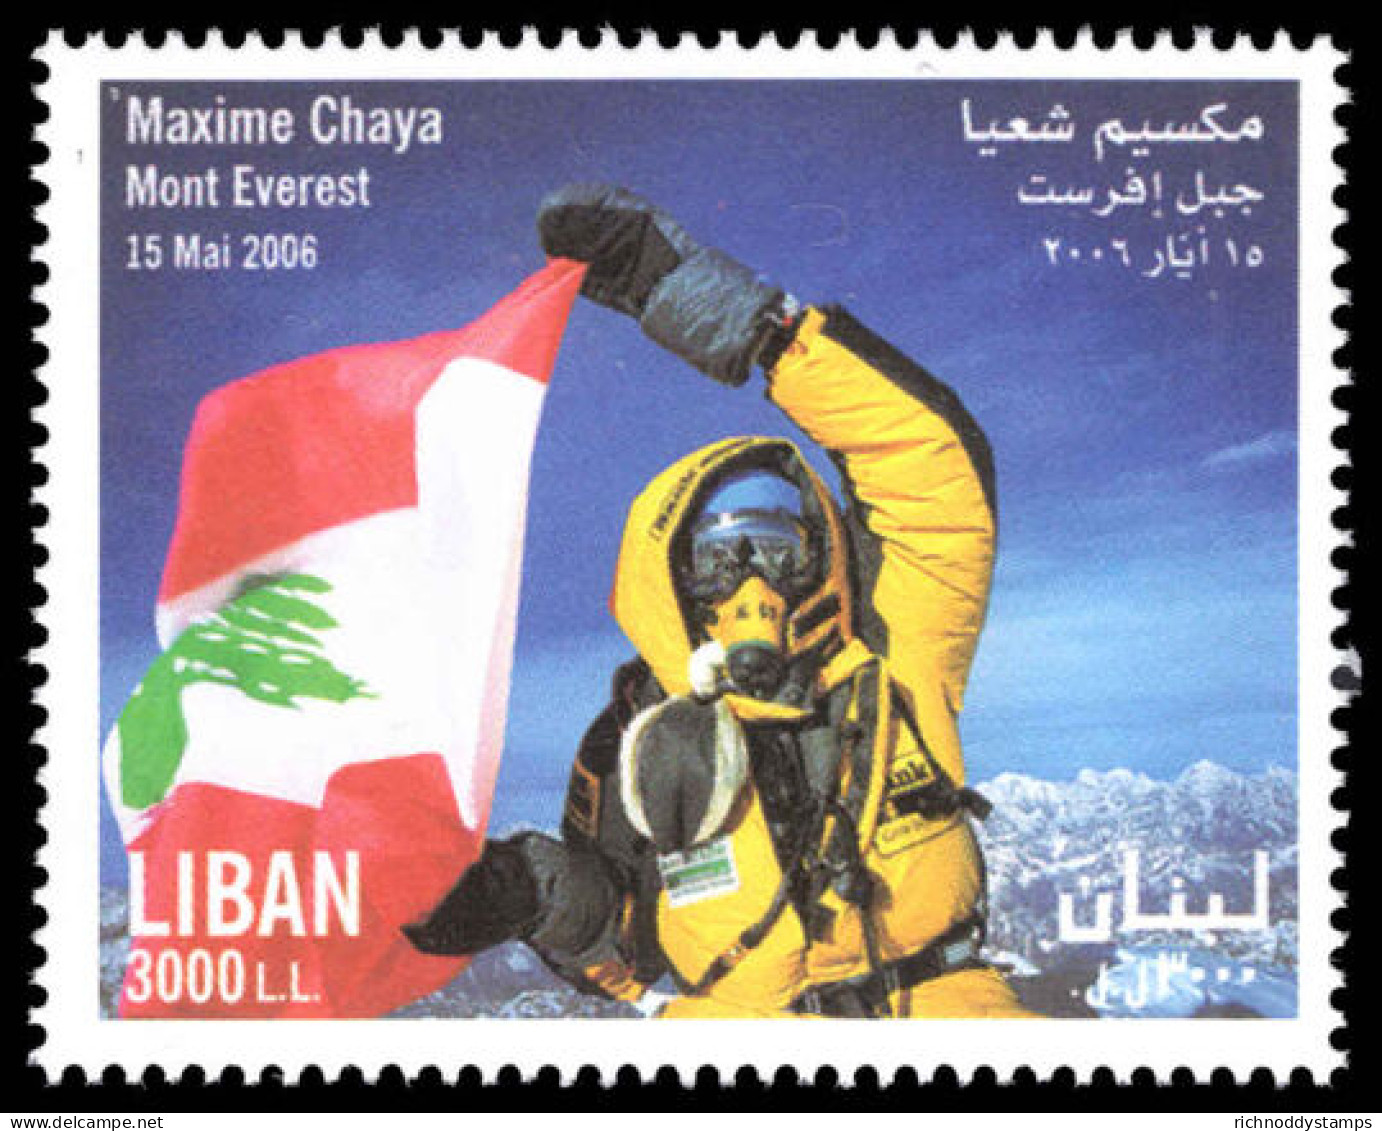 Lebanon 2007 Maxime Chaya Stamp From Souvenir Sheet Unmounted Mint. - Lebanon